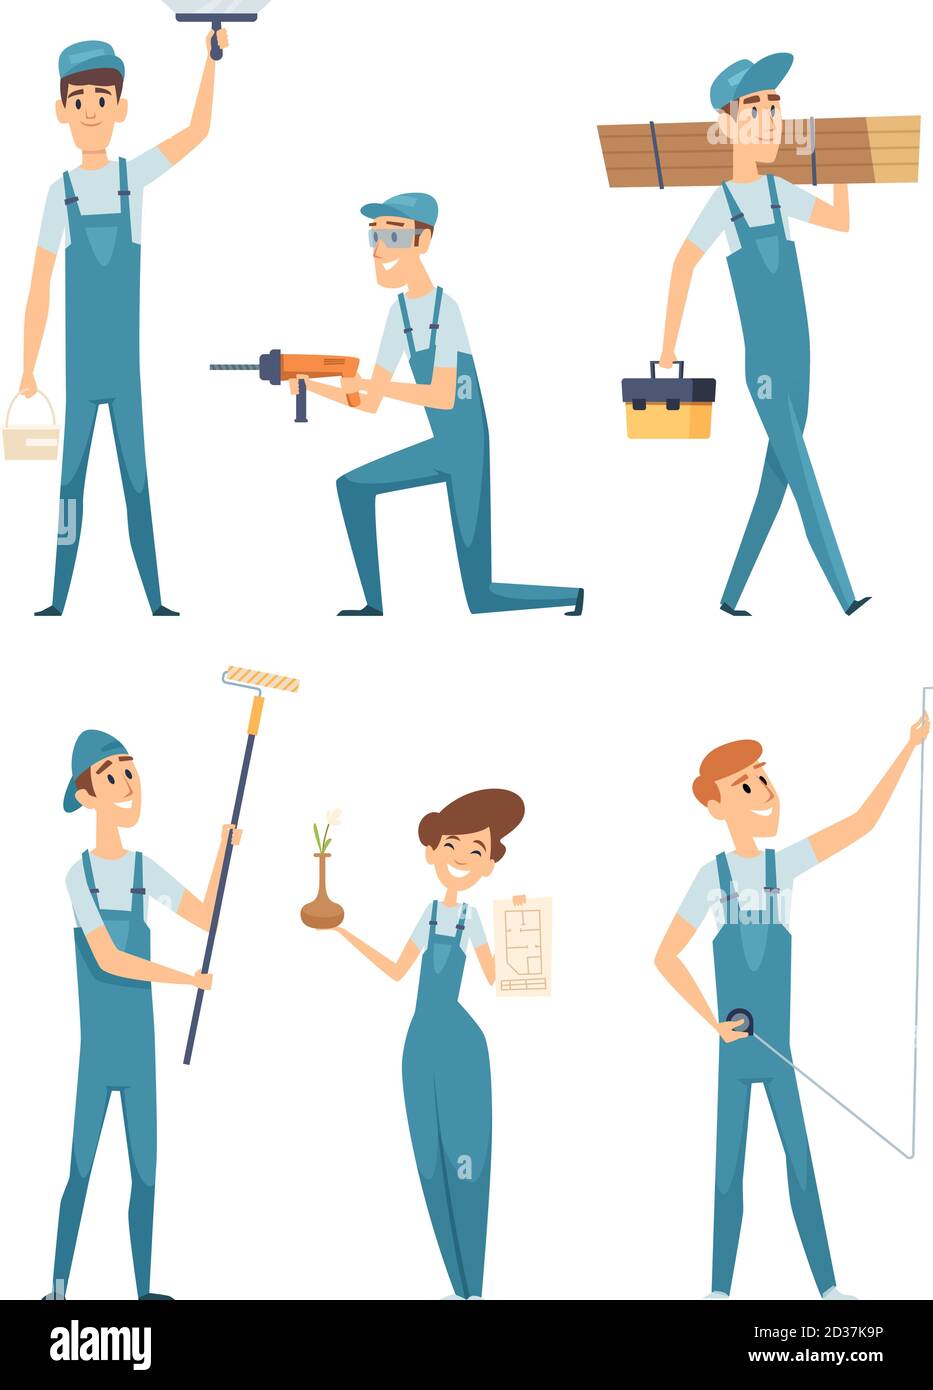 Worker characters. Professional people builders constructors factory workers home repair mascot vector illustrations Stock Vector